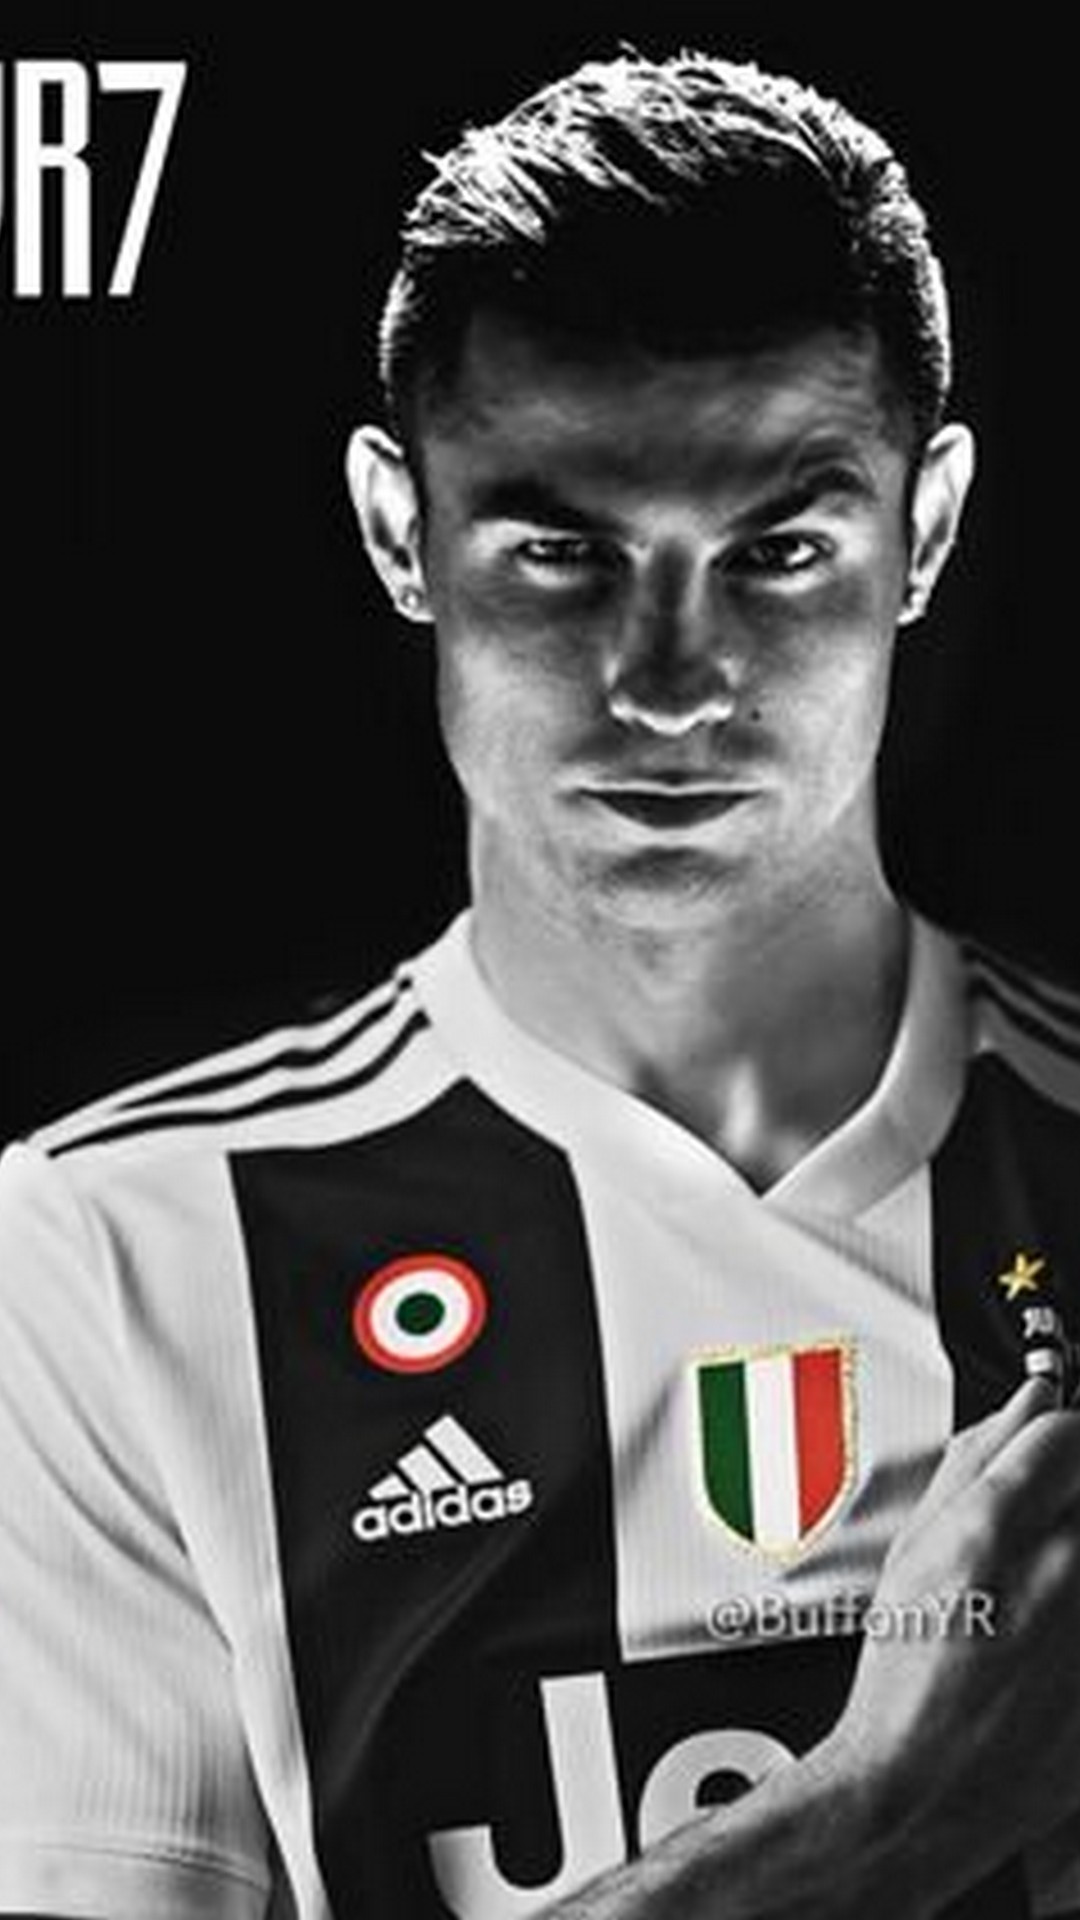 Cristiano Ronaldo Juventus Wallpaper Android